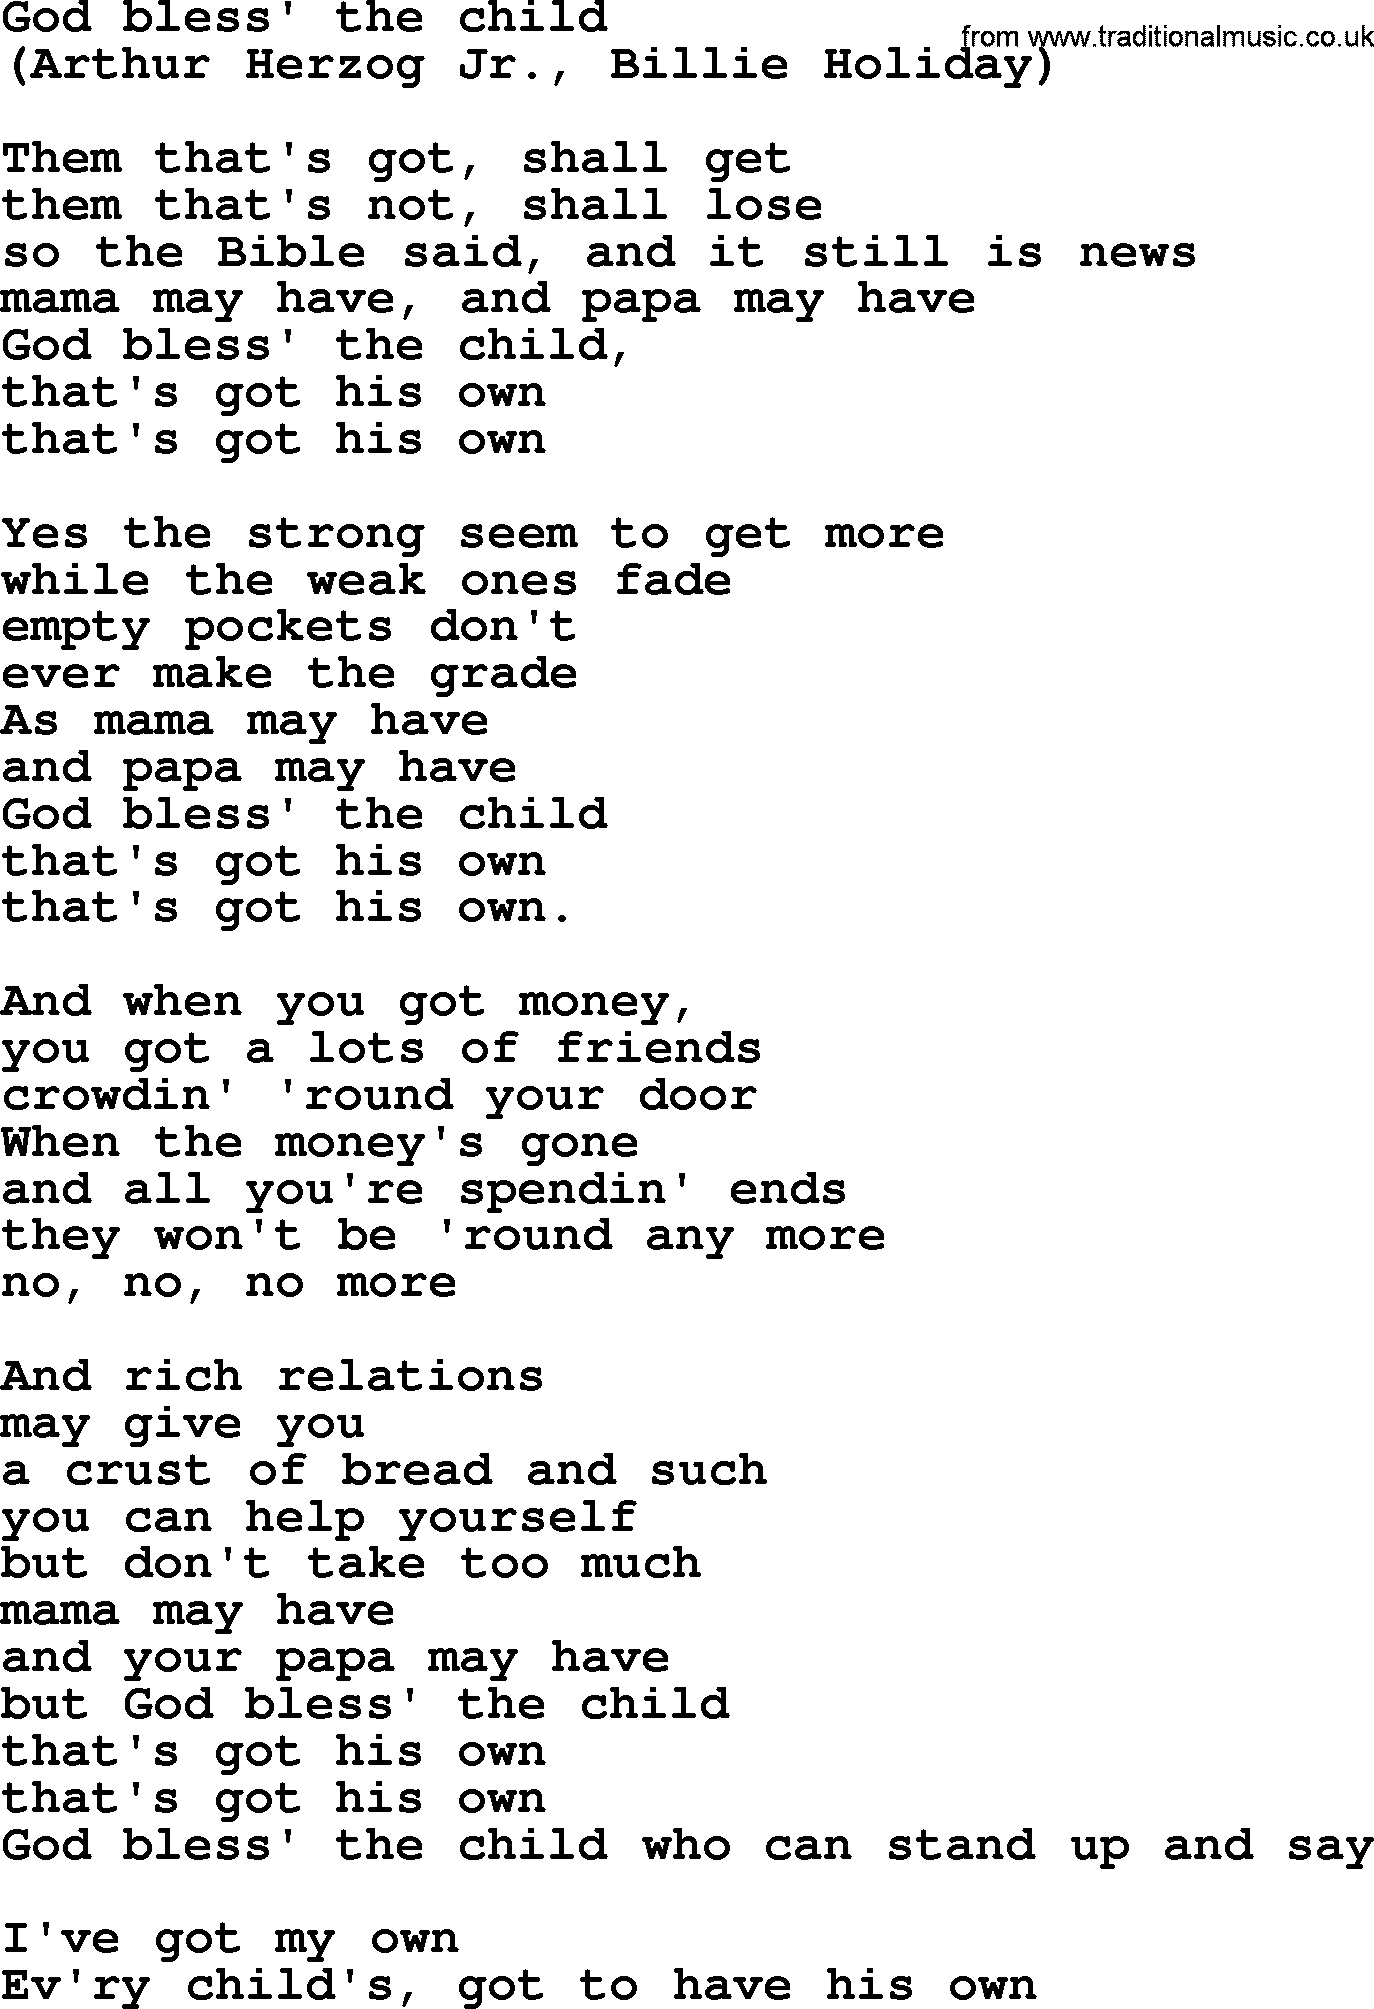 The Byrds song God Bless' The Child, lyrics